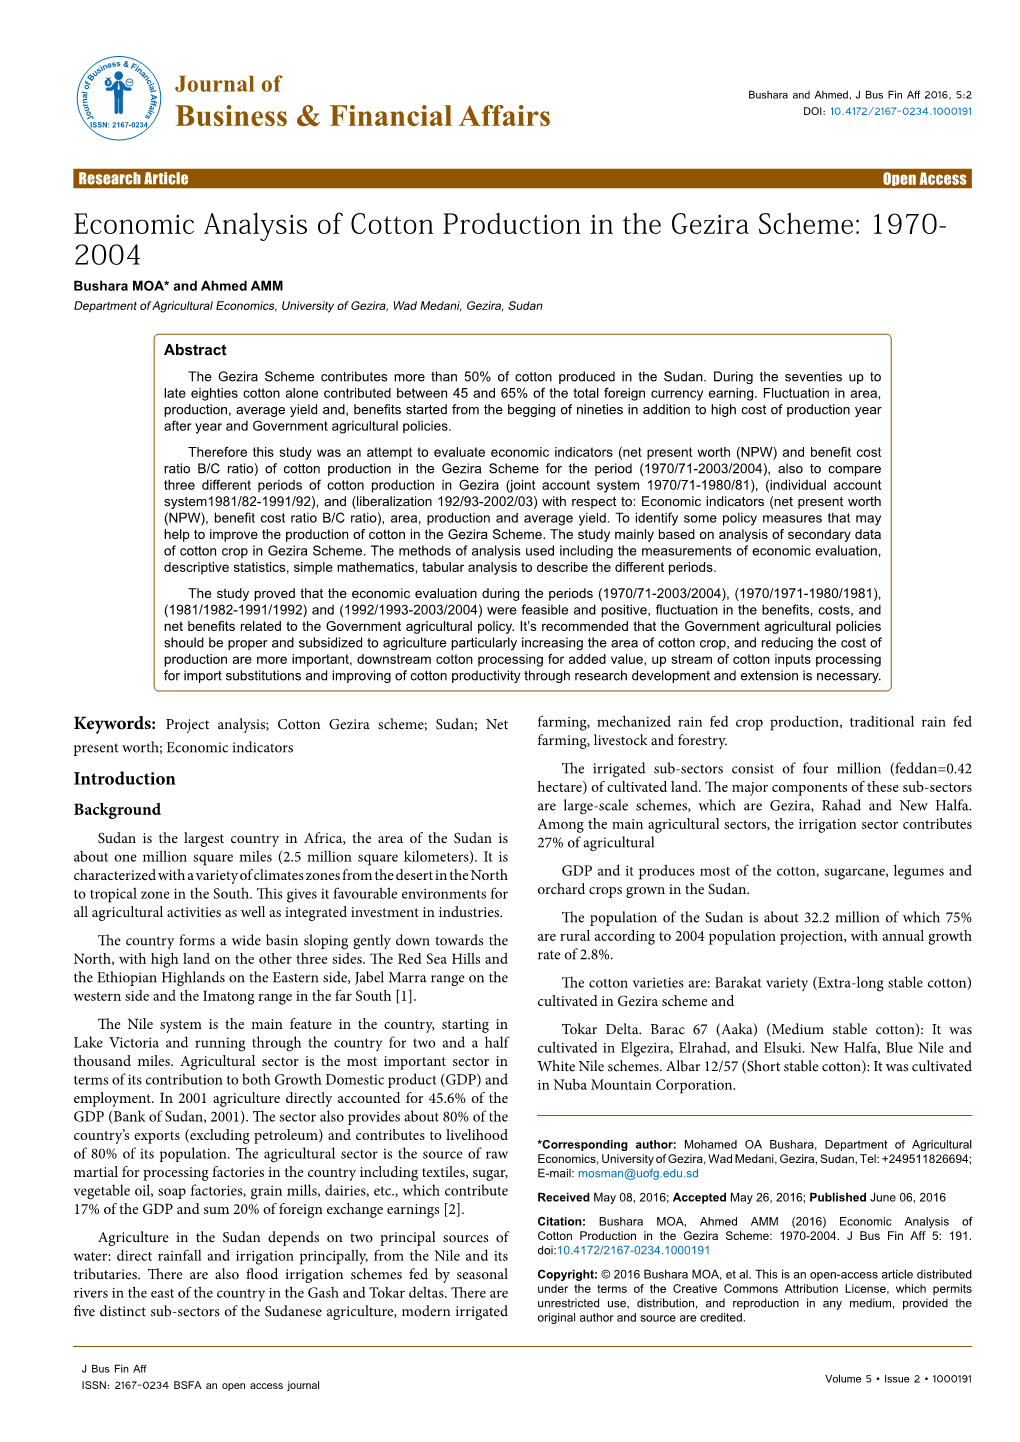 Economic Analysis of Cotton Production in the Gezira Scheme